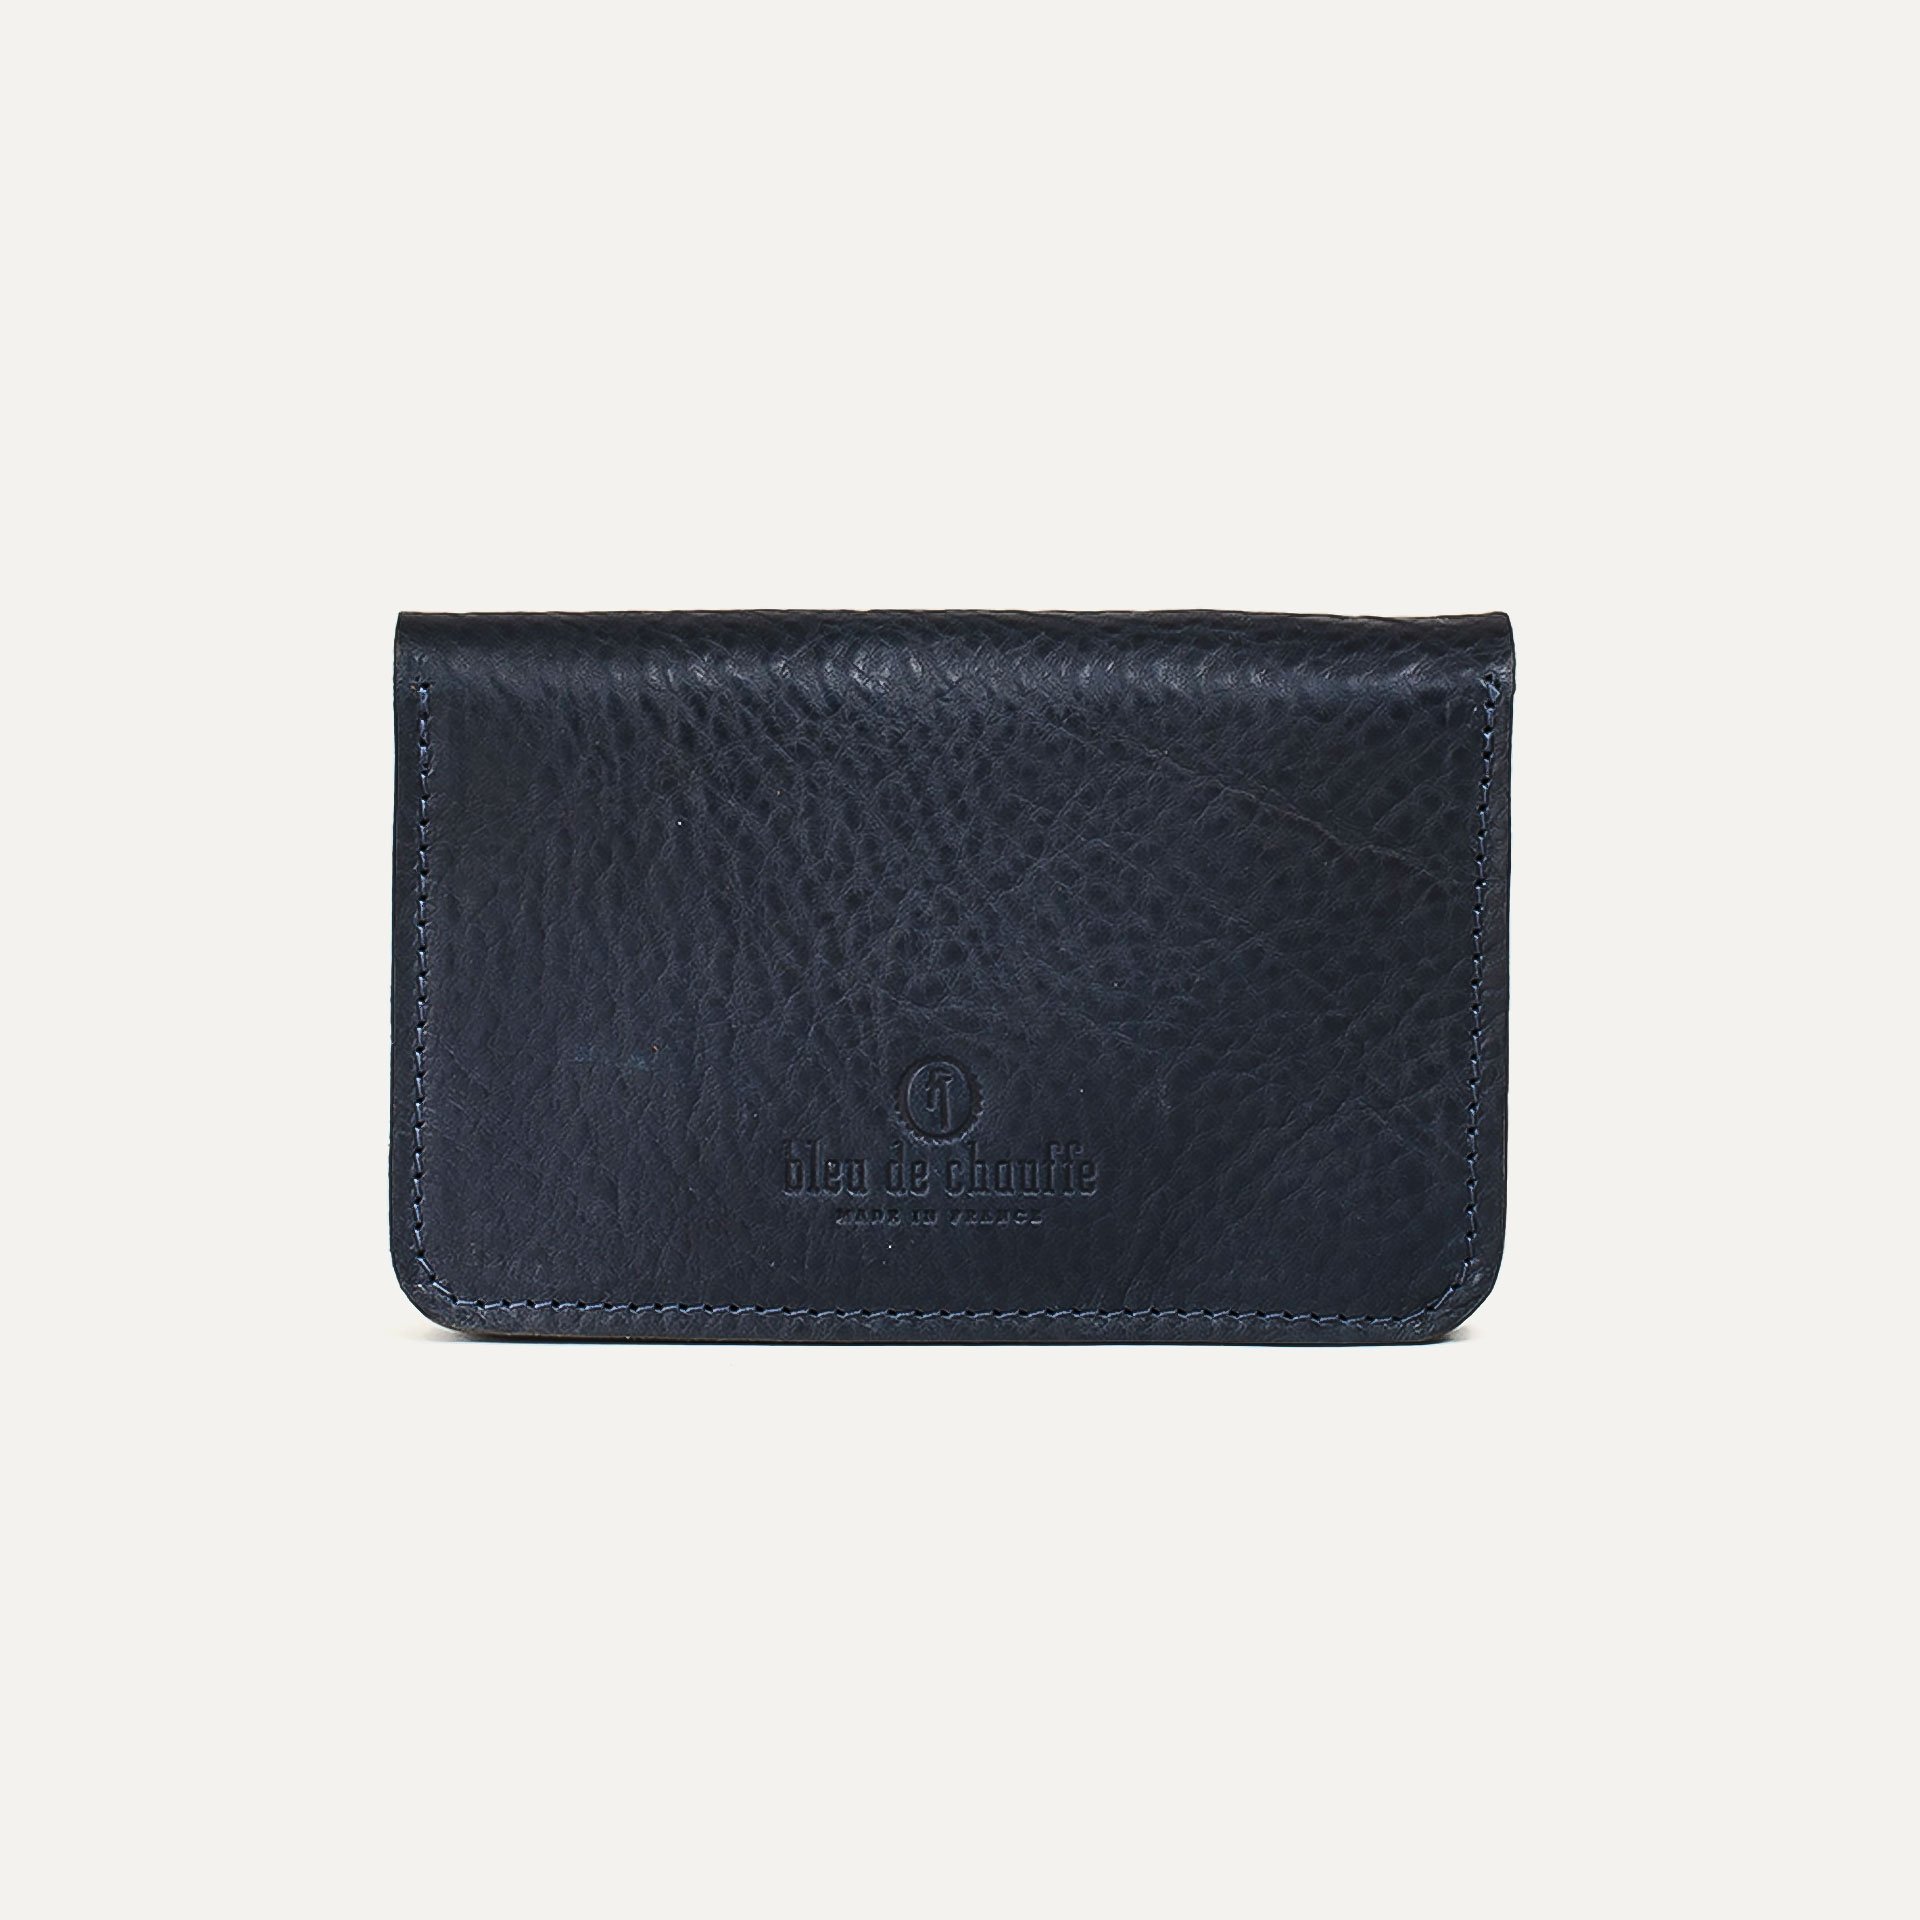 Grisbi wallet - Navy Blue (image n°2)